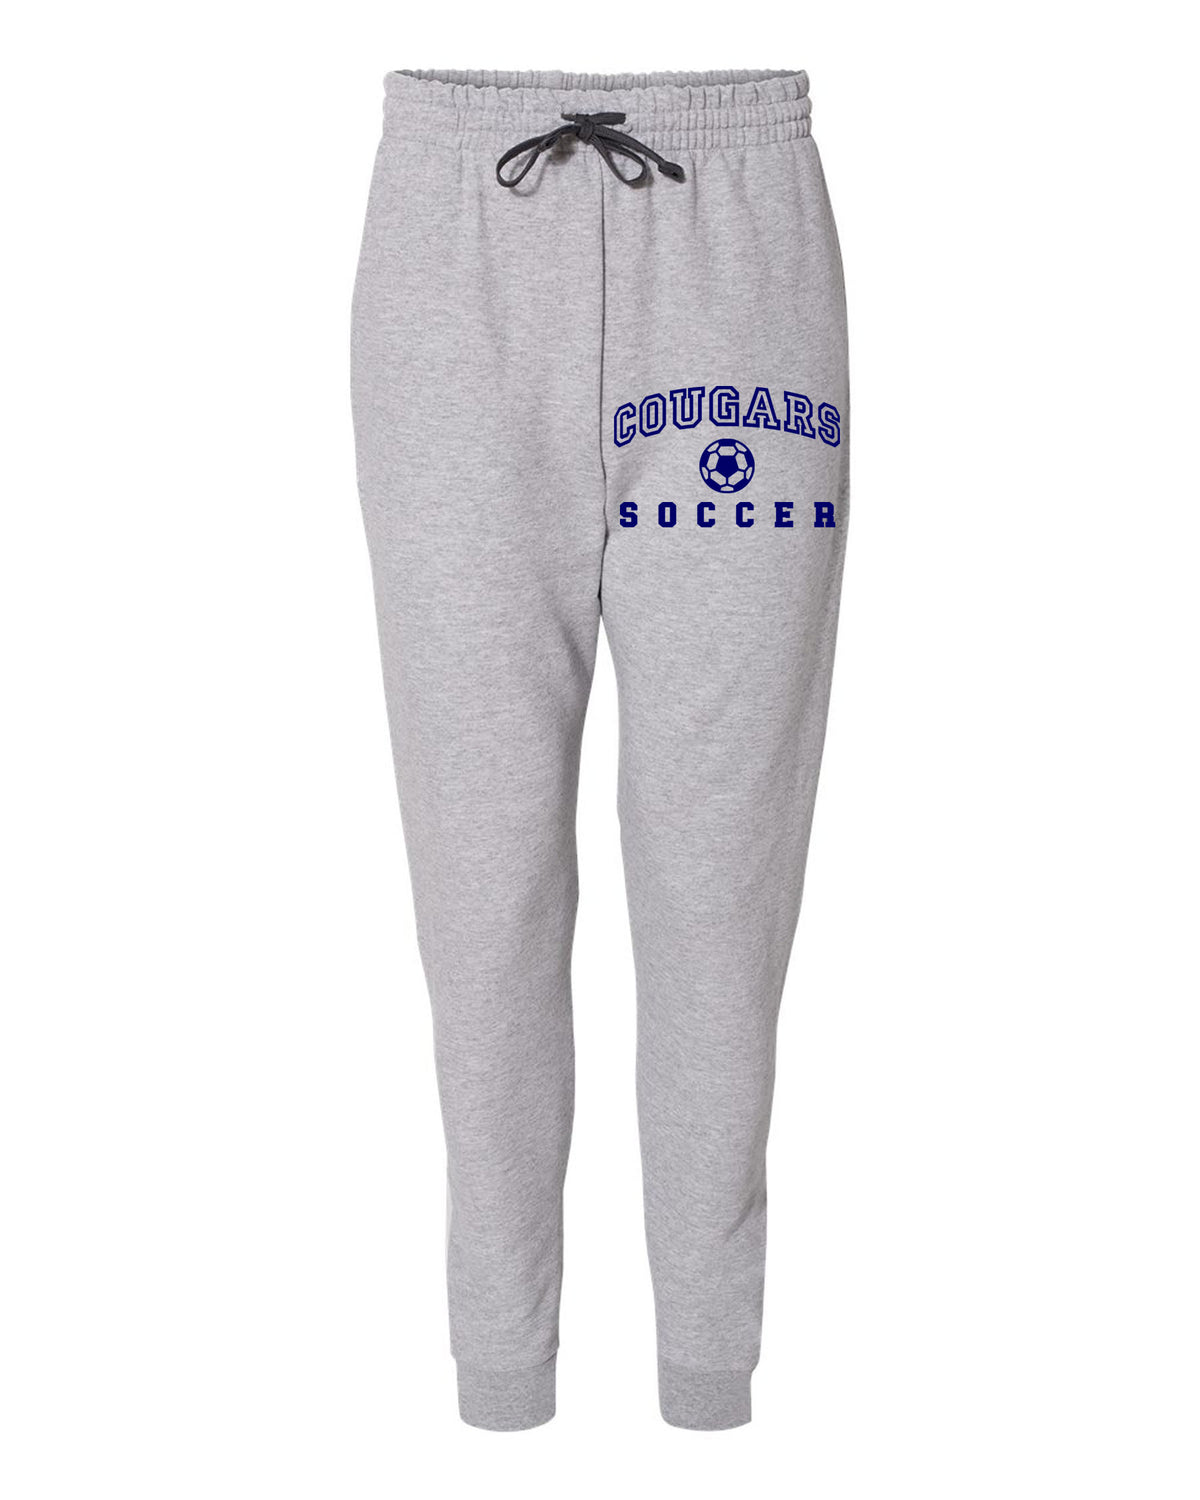 Kittatinny Soccer Design 1 Sweatpants